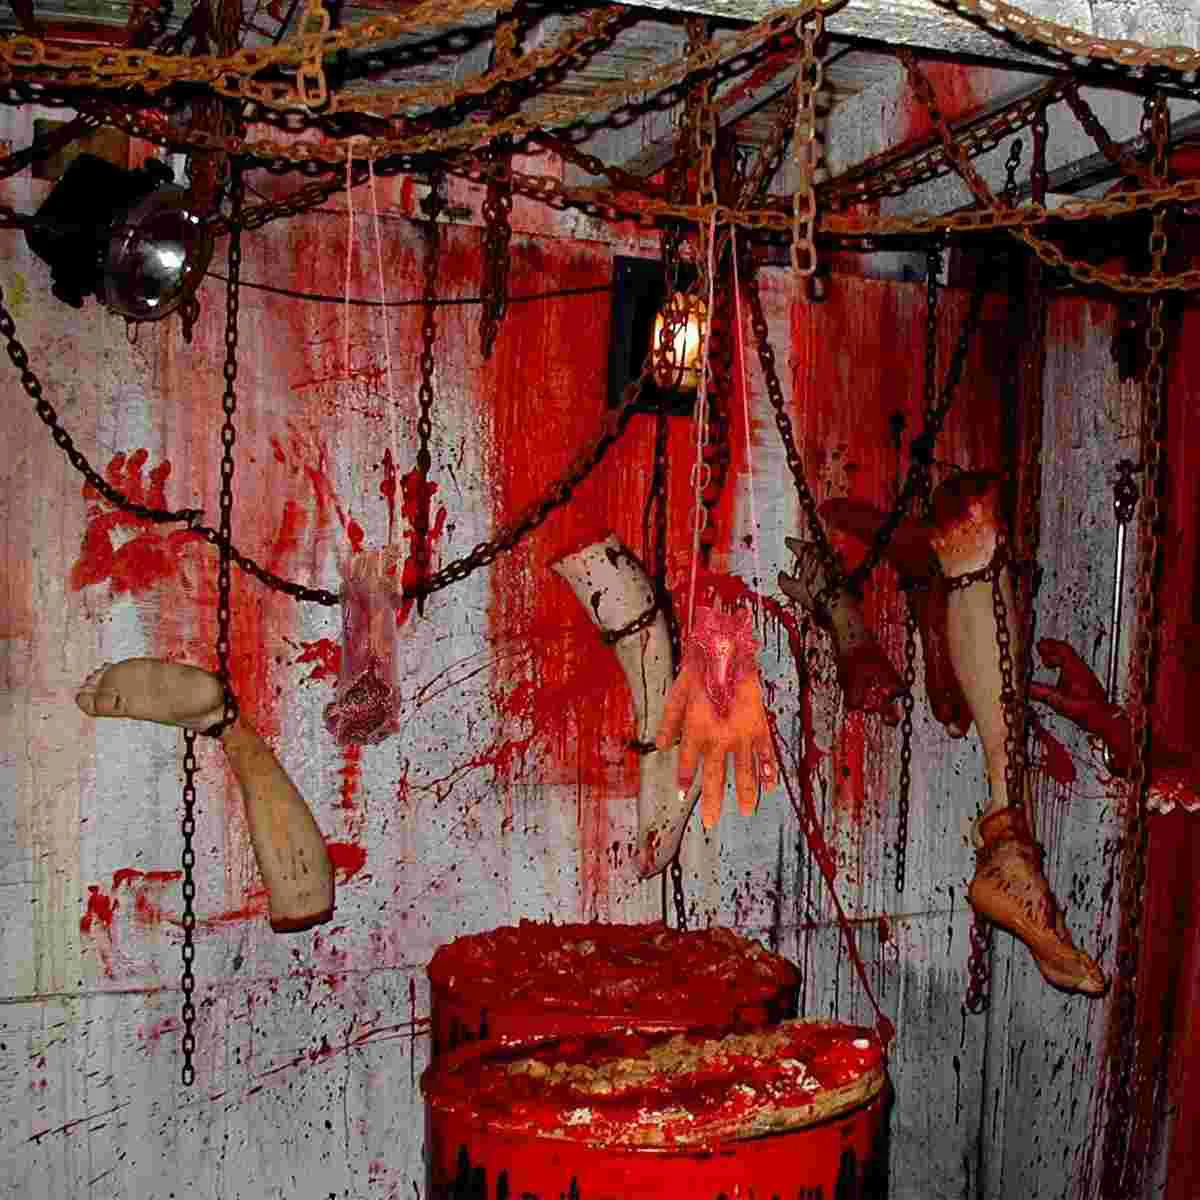 

Tricky Props Broken Hand Hanging Creepy Organ Pendant Haunted House Scene Decor Halloween Bar Party Plastic Hangers